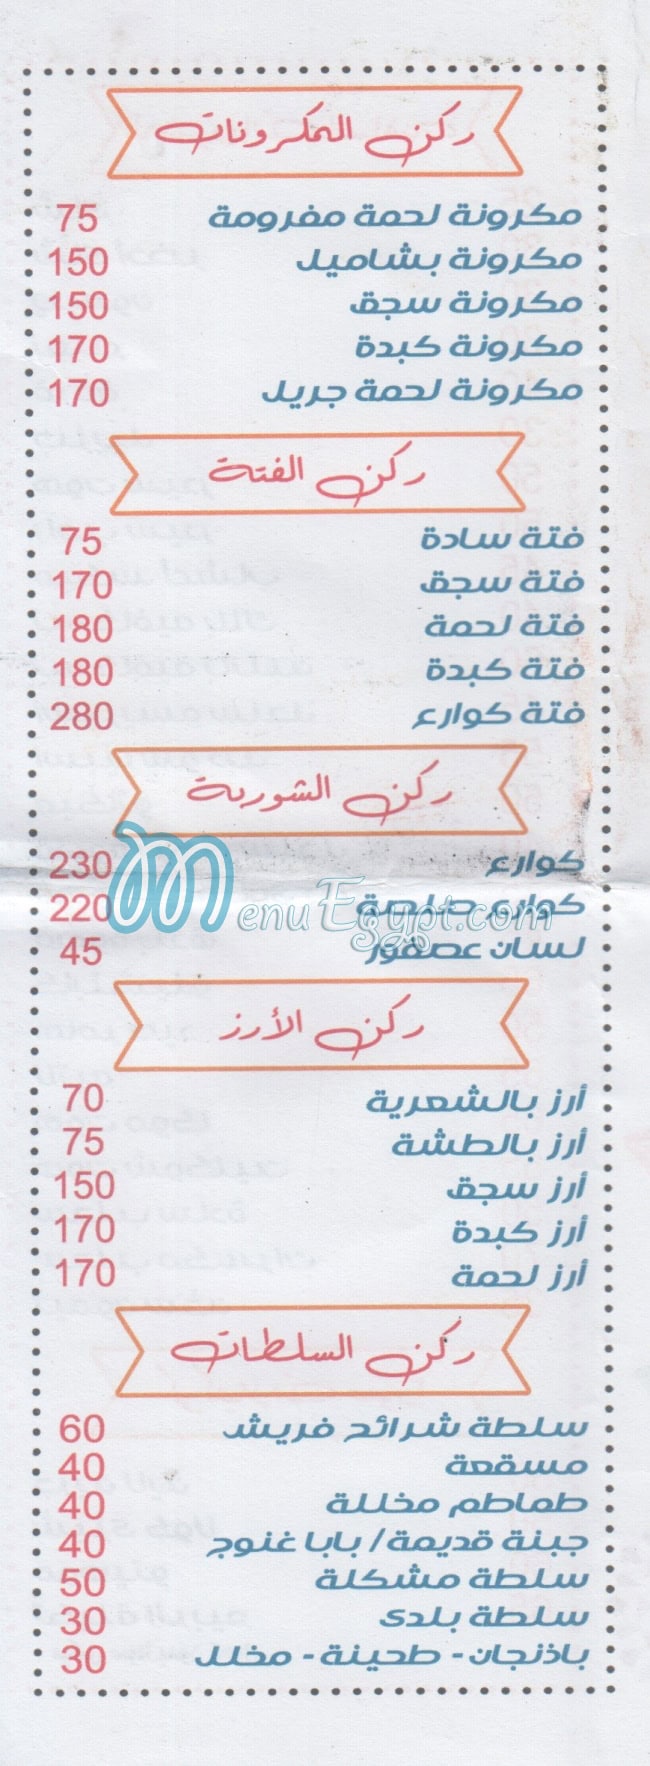 Hawawshi El Rabie Imbaba menu